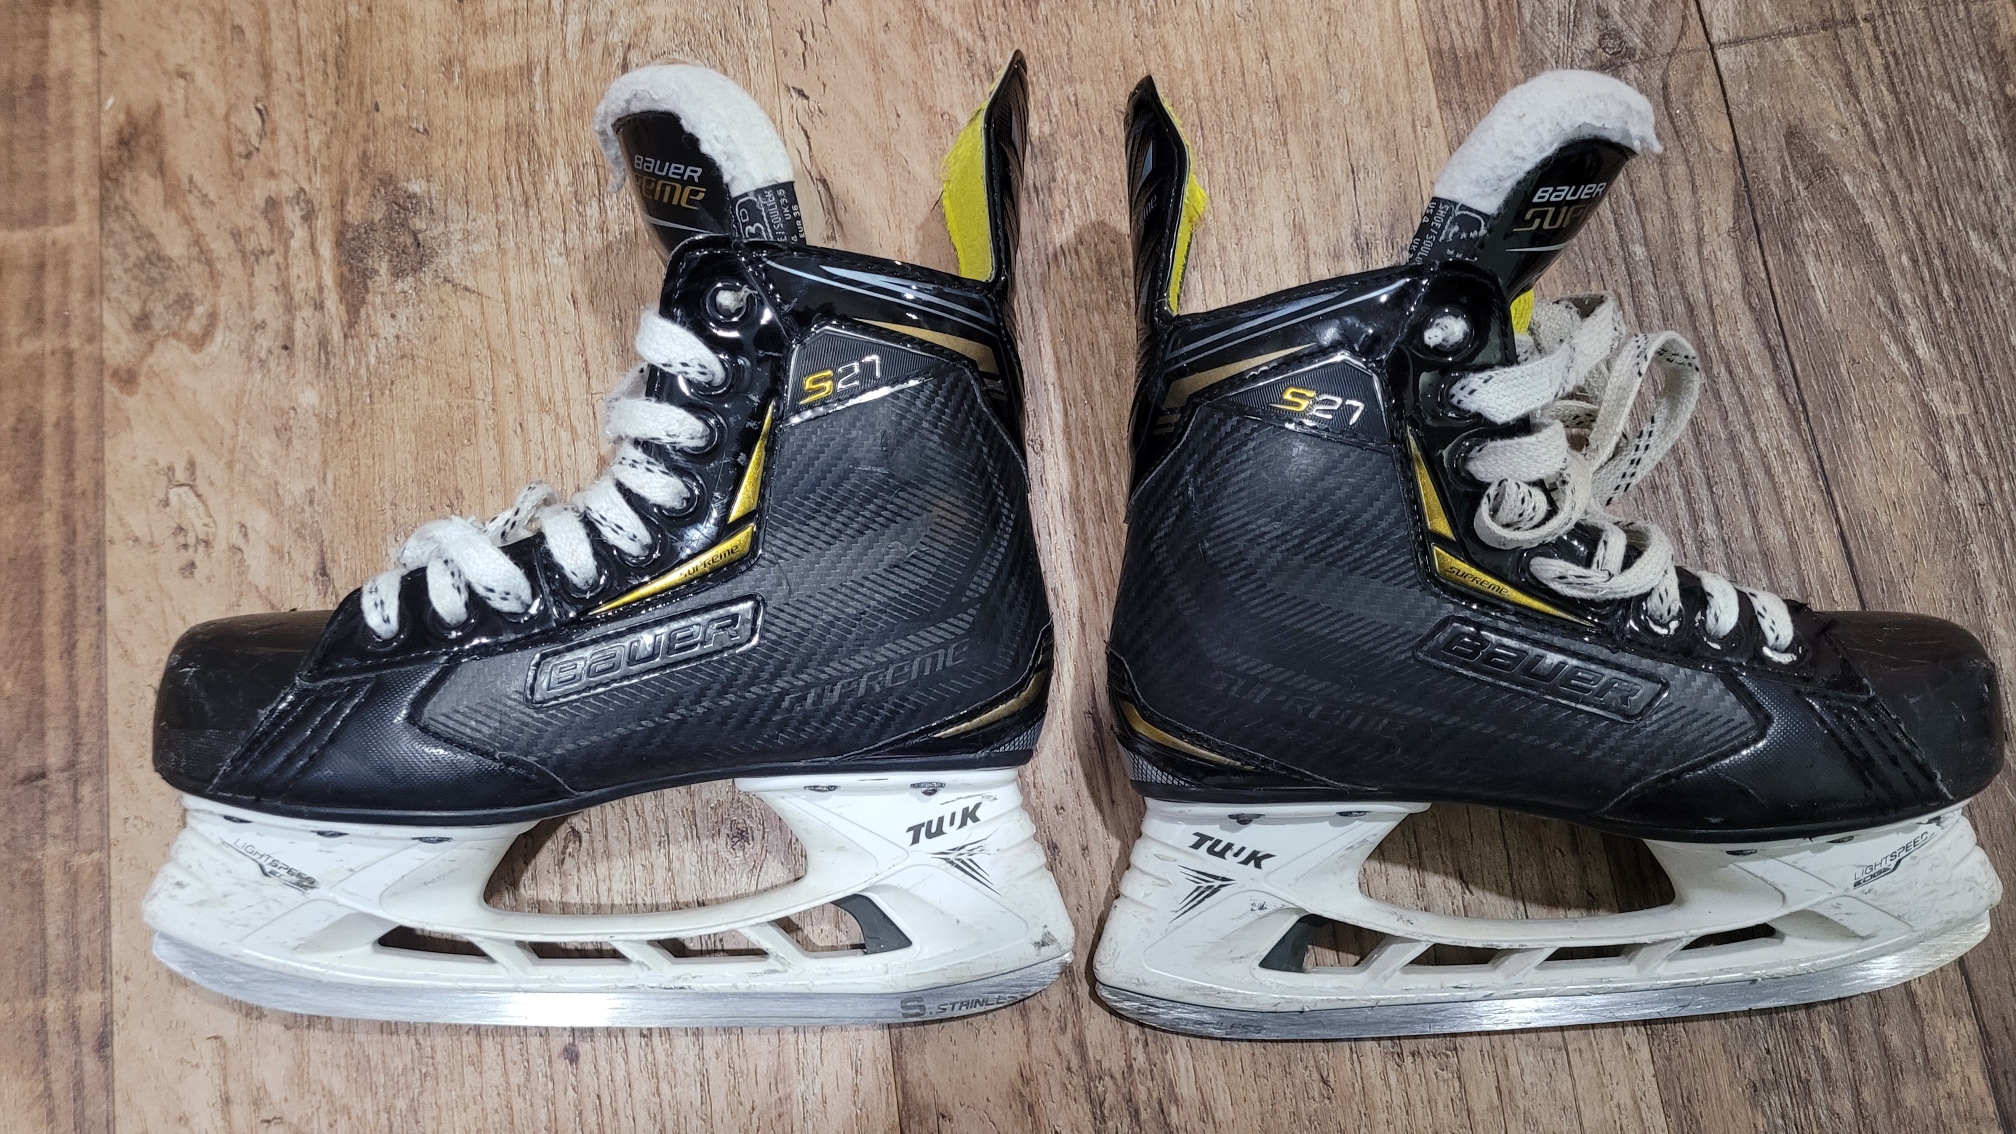 Bauer Supreme S27 size 3 reg width (D) Hockey Skates used